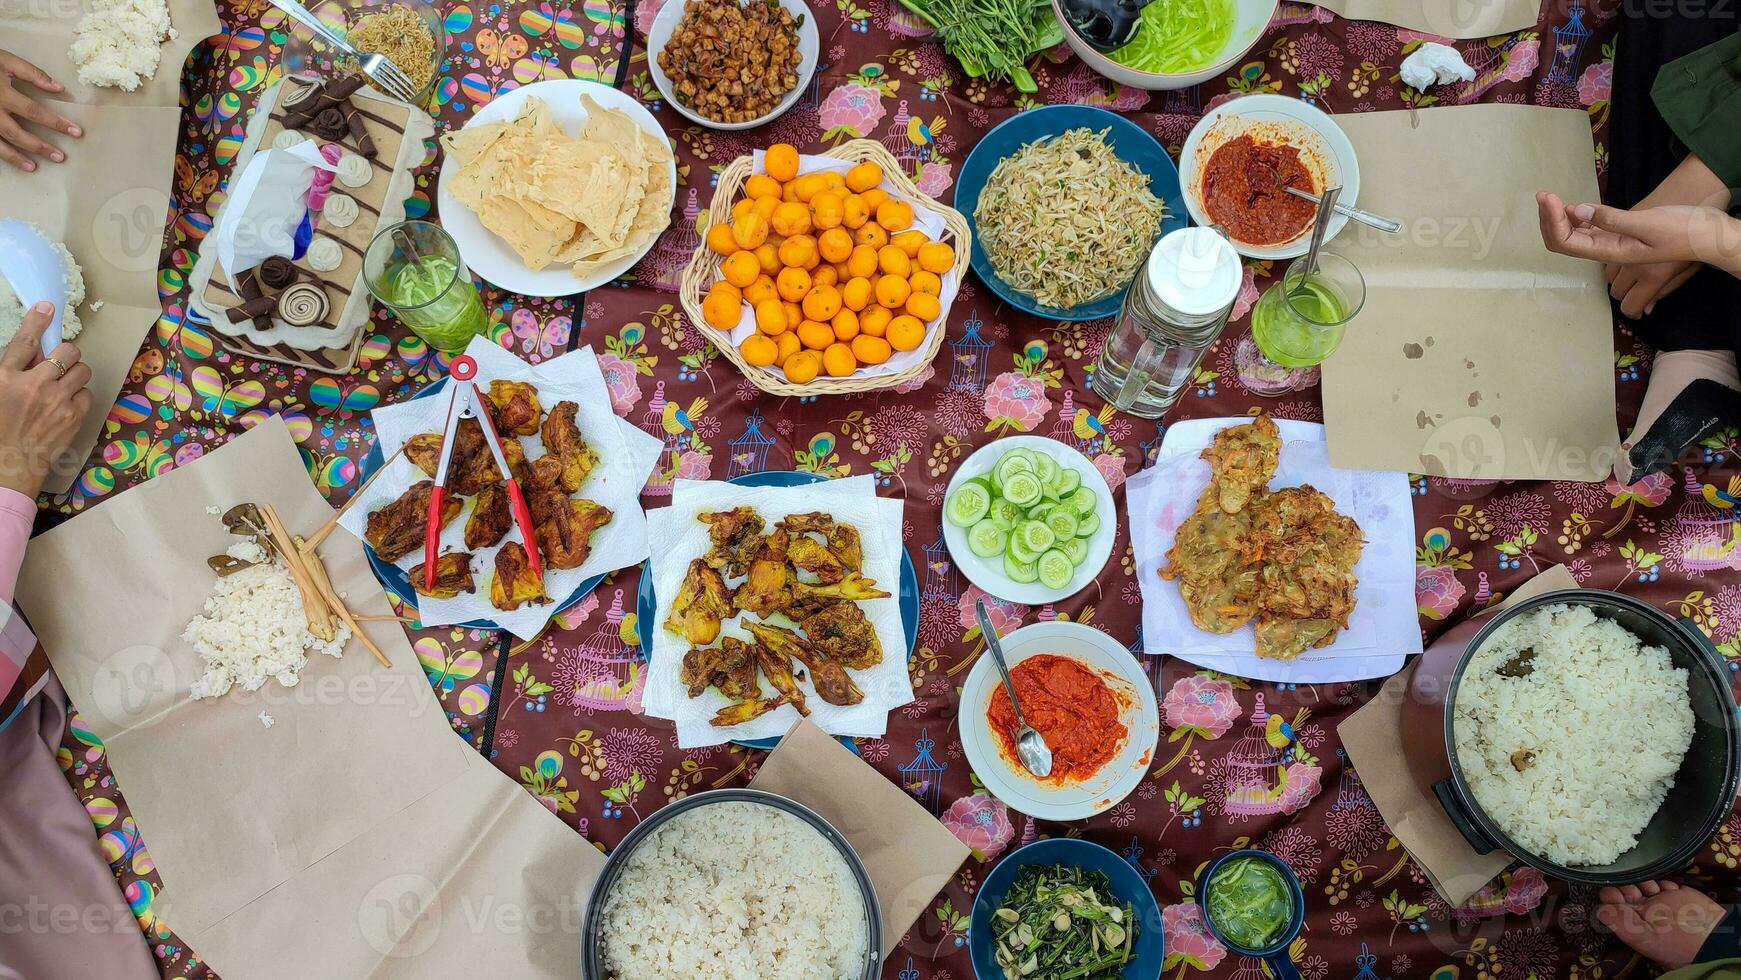 top visie met hand- divers voedsel buffet gezeefd een verdieping dining stijl met bokeh achtergrond vaak in Ramadan maand en Islam eid al fitr en al adha viering foto